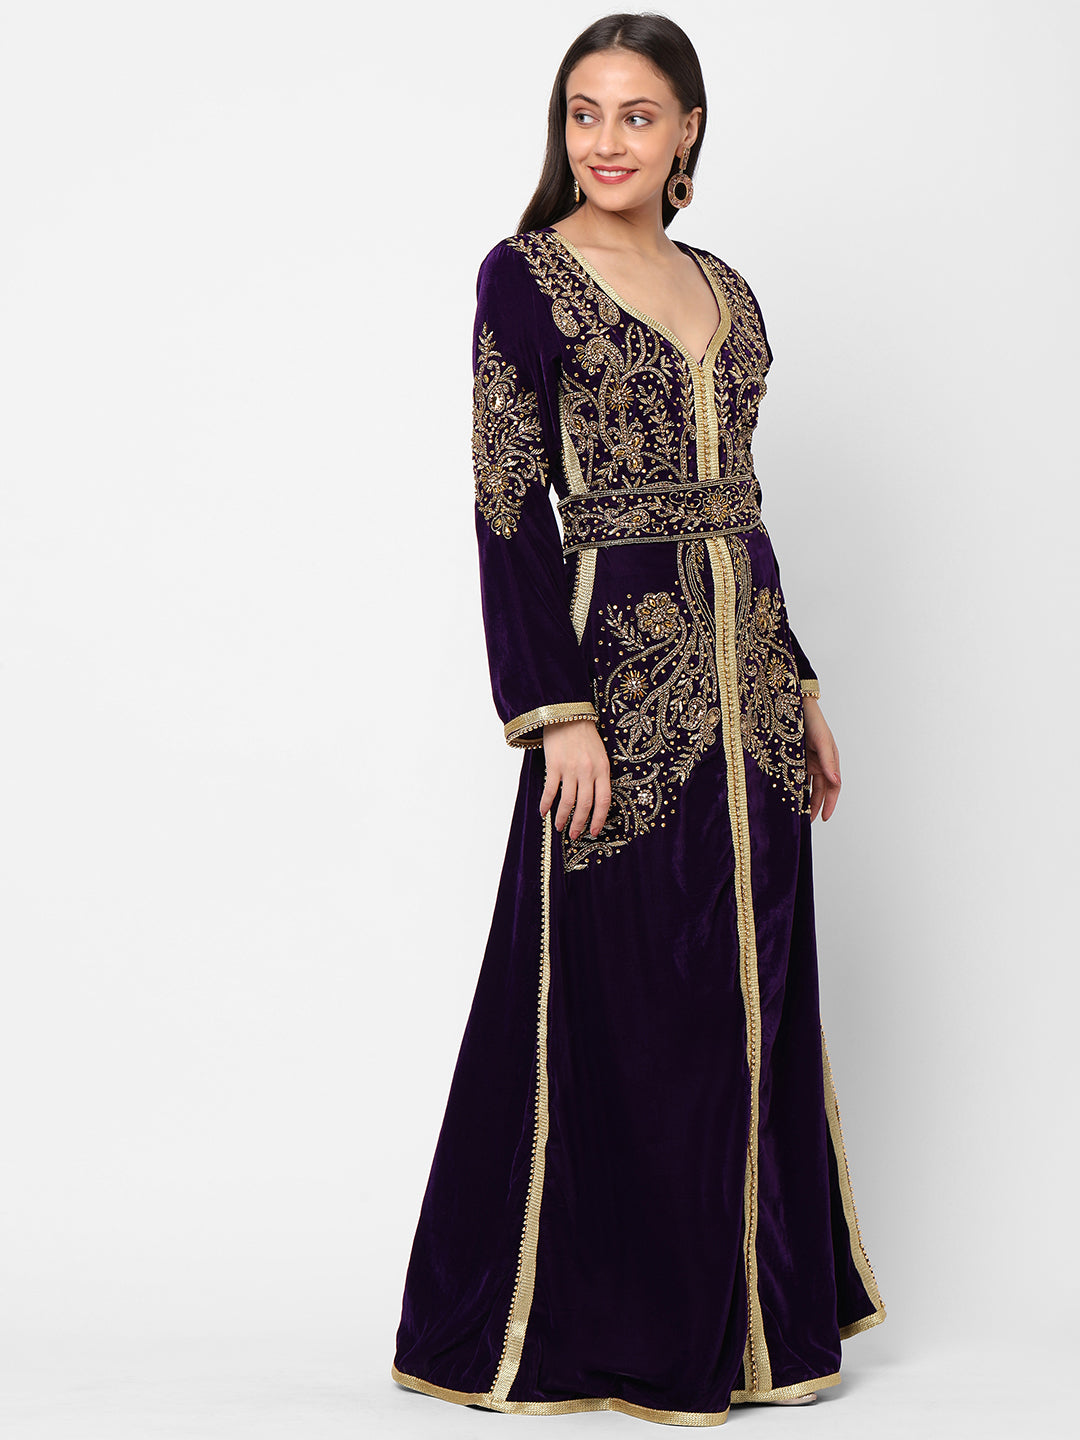 Designer Caftan Evening Party Gown in Purple Velvet - Maxim Creation